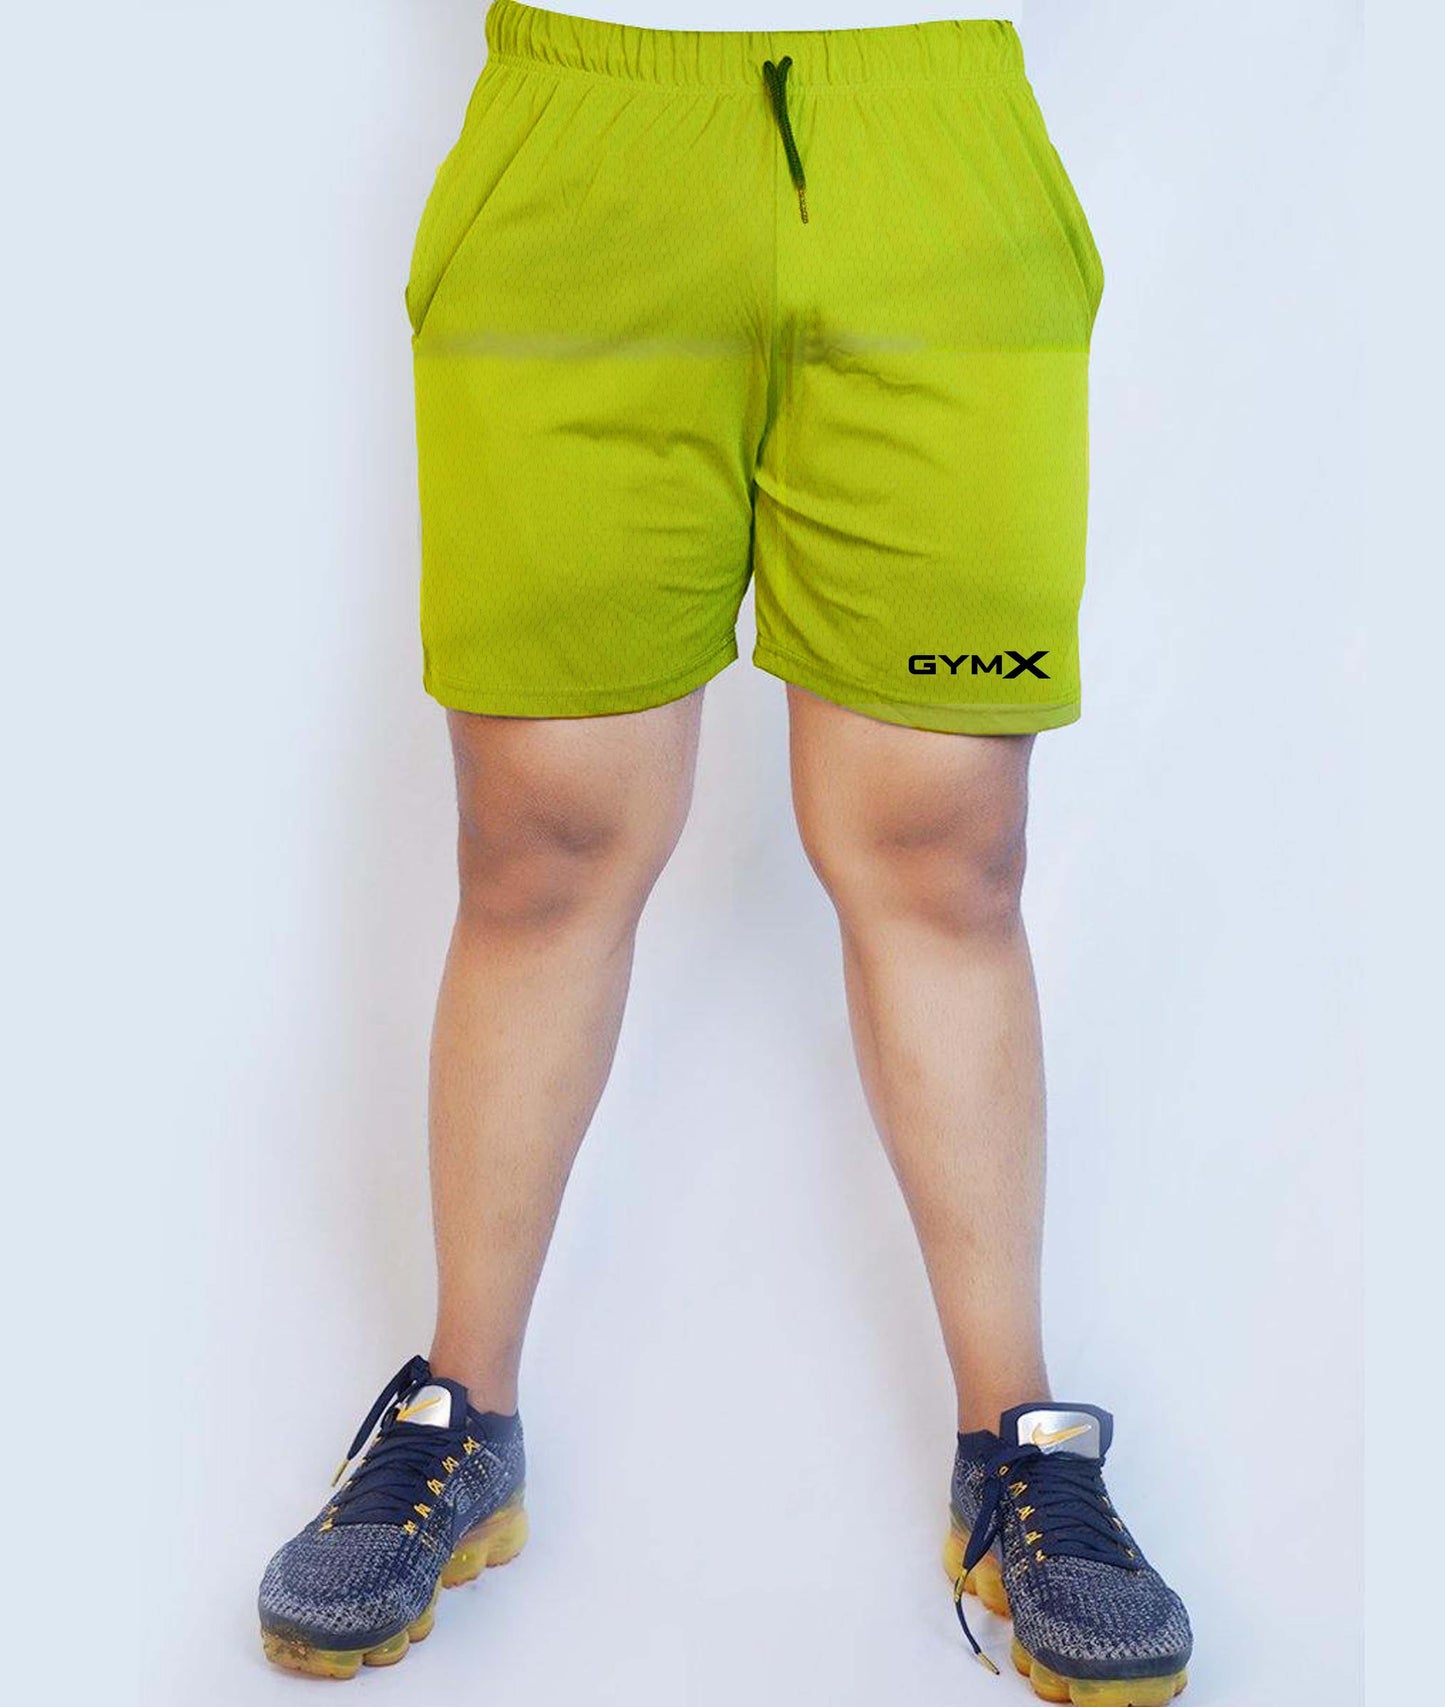 Dot mesh green shorts - Sale